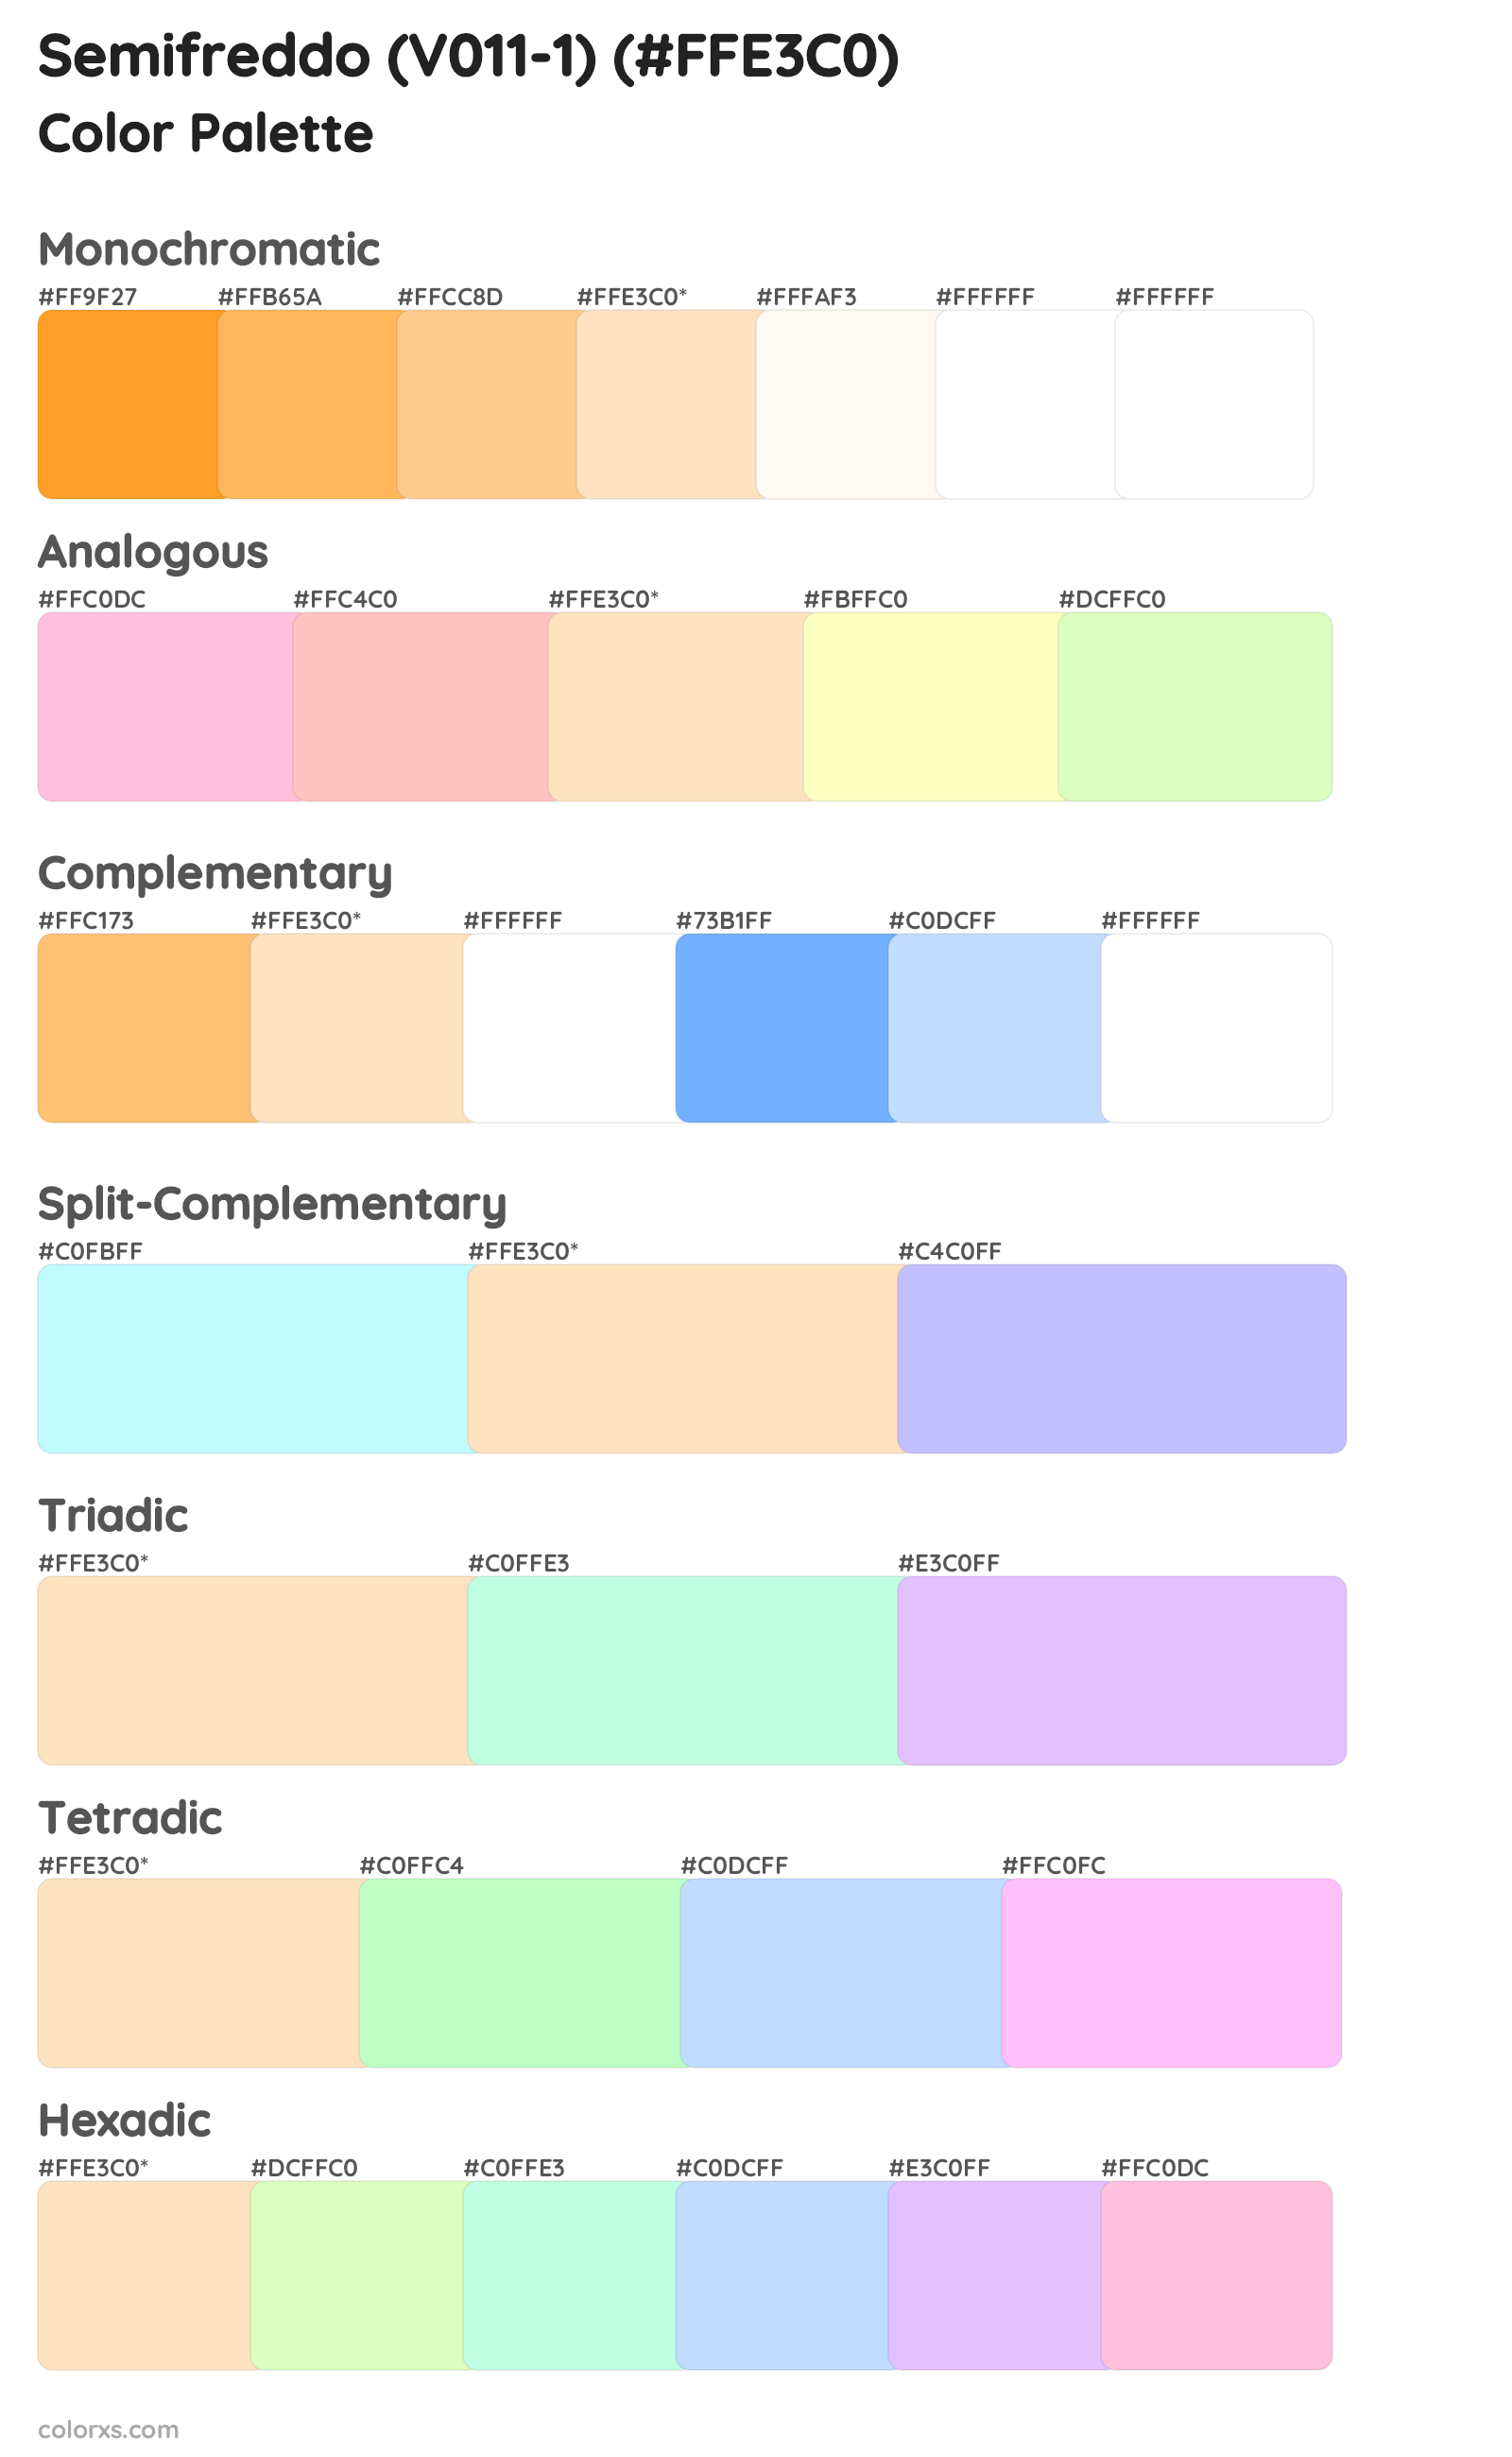 Semifreddo (V011-1) Color Scheme Palettes